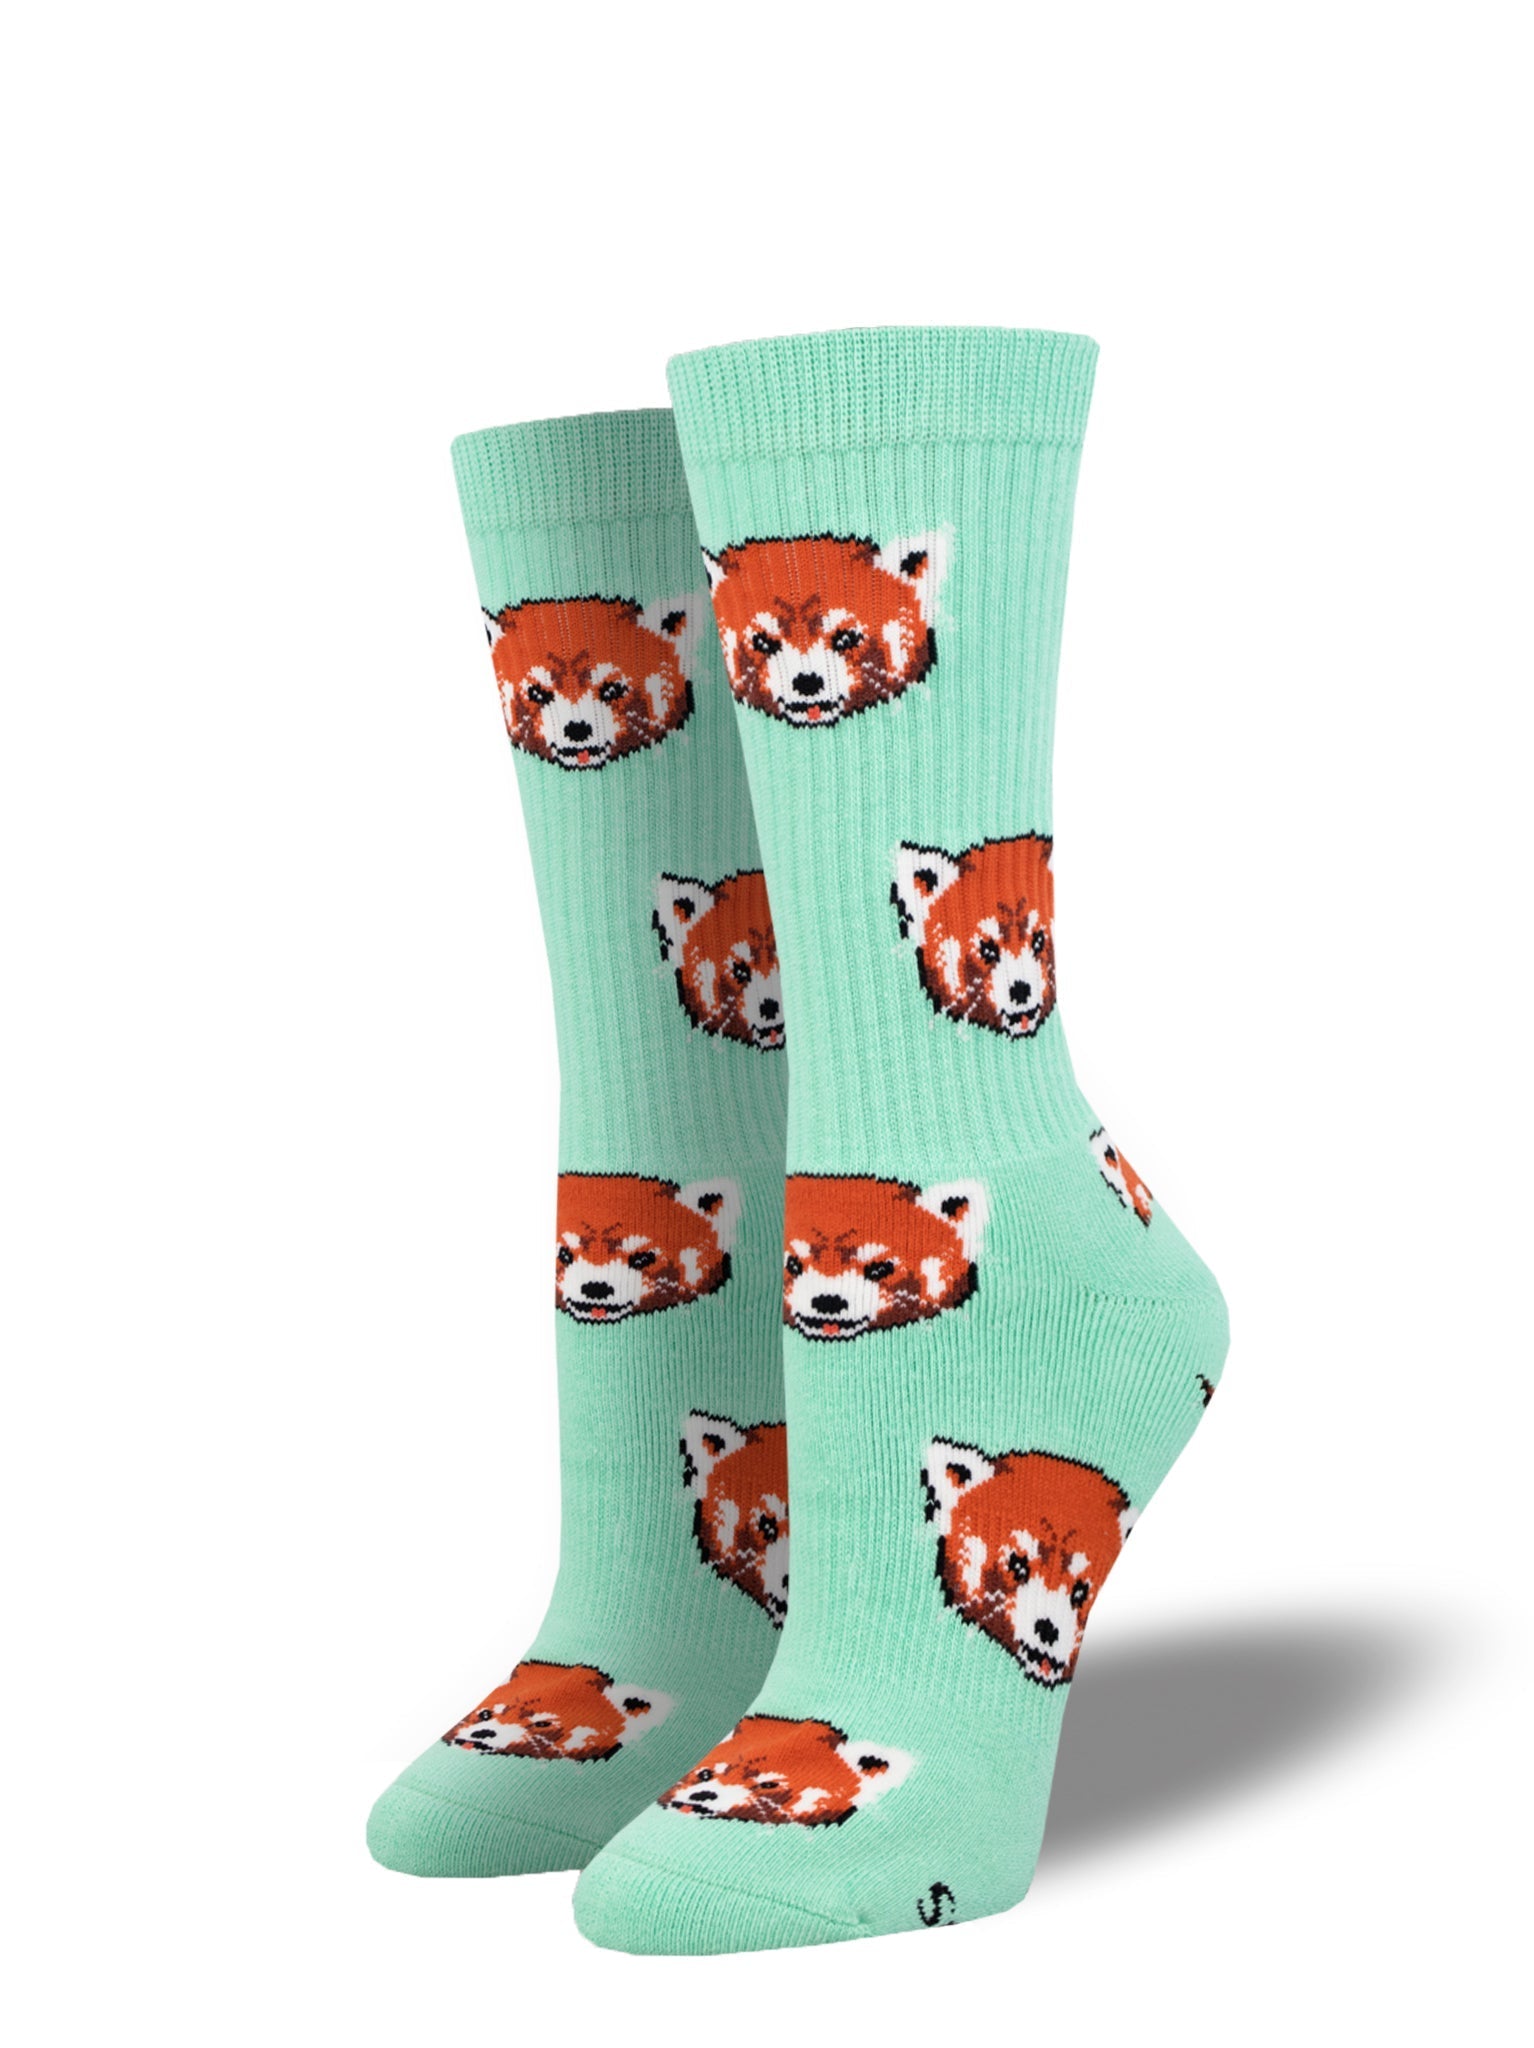 "Red Panda" Athletic Socks